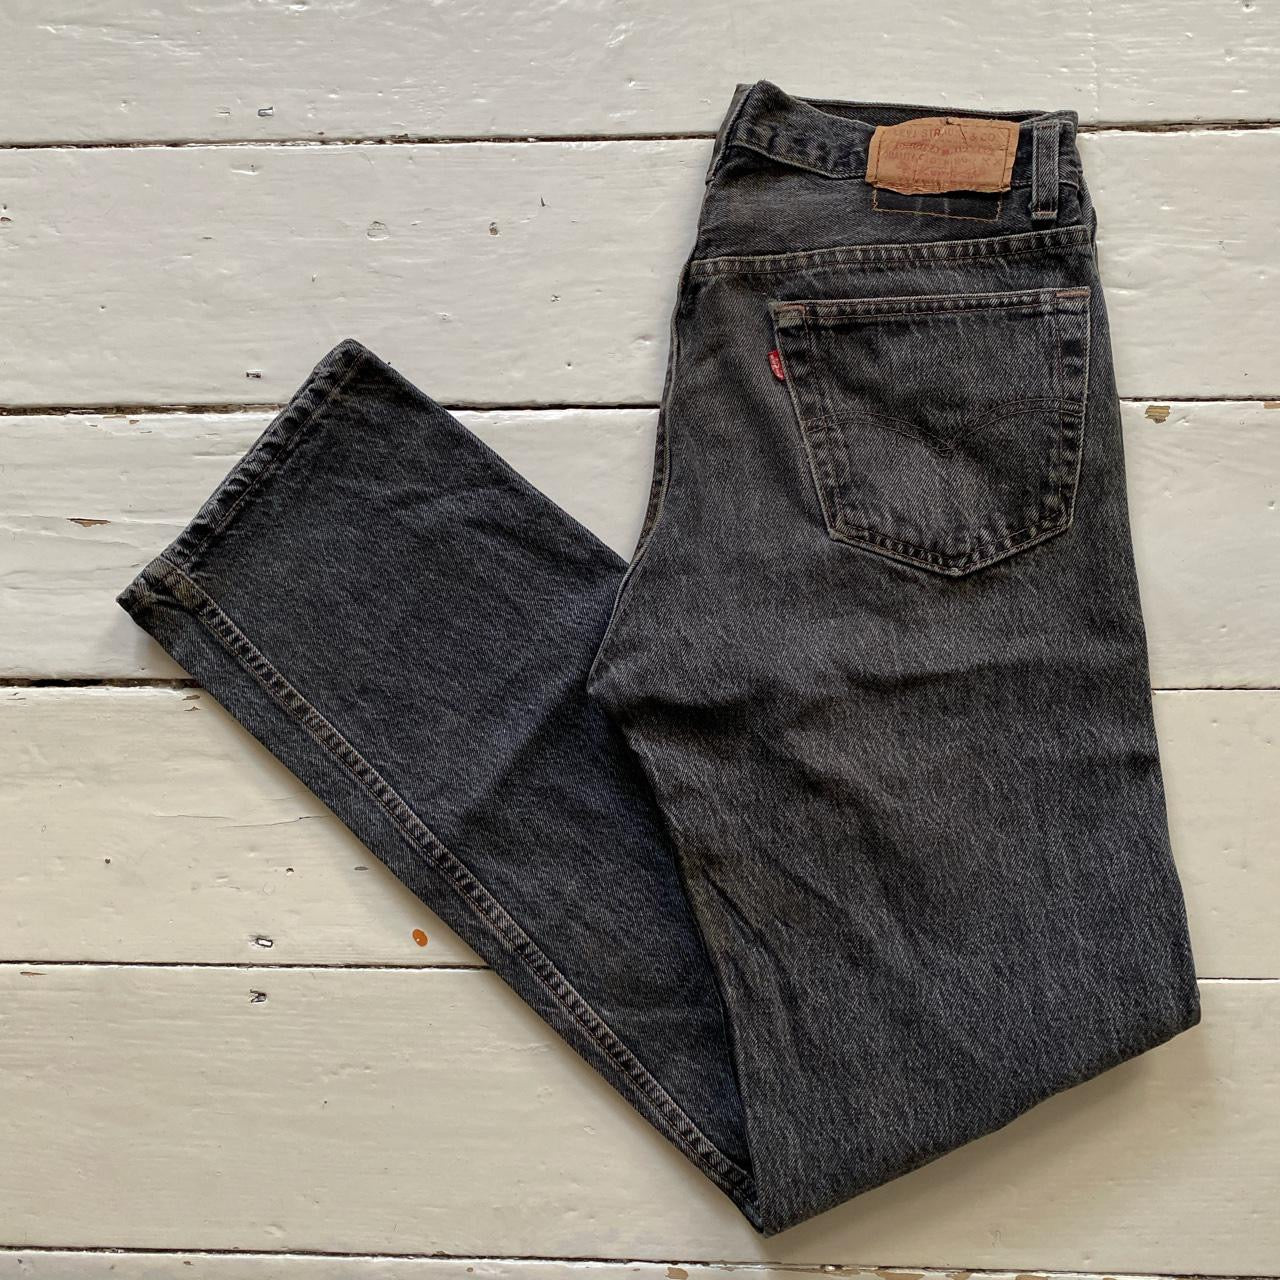 Levis Charcoal 501 Classic Jeans (33/32)